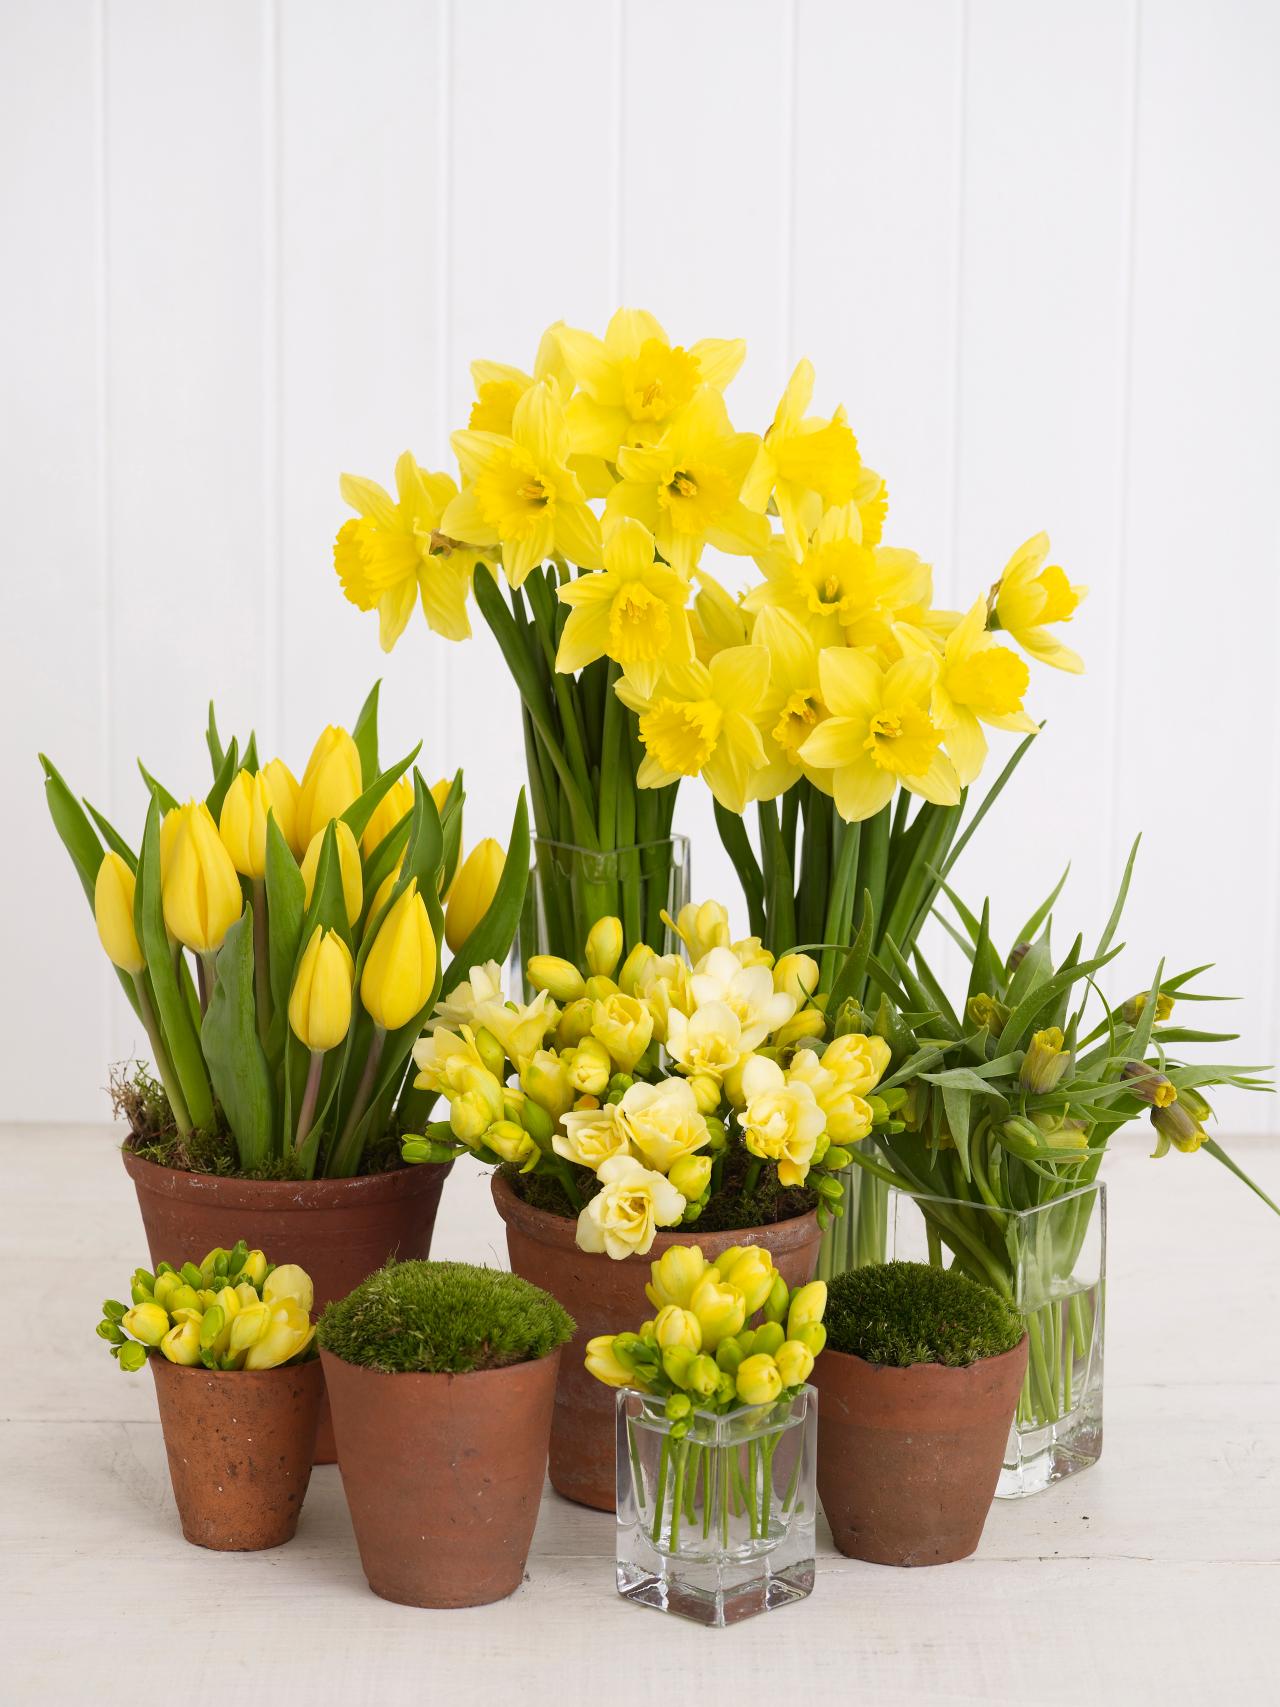 déco fleurs printemps original jolie style jaune tulipe